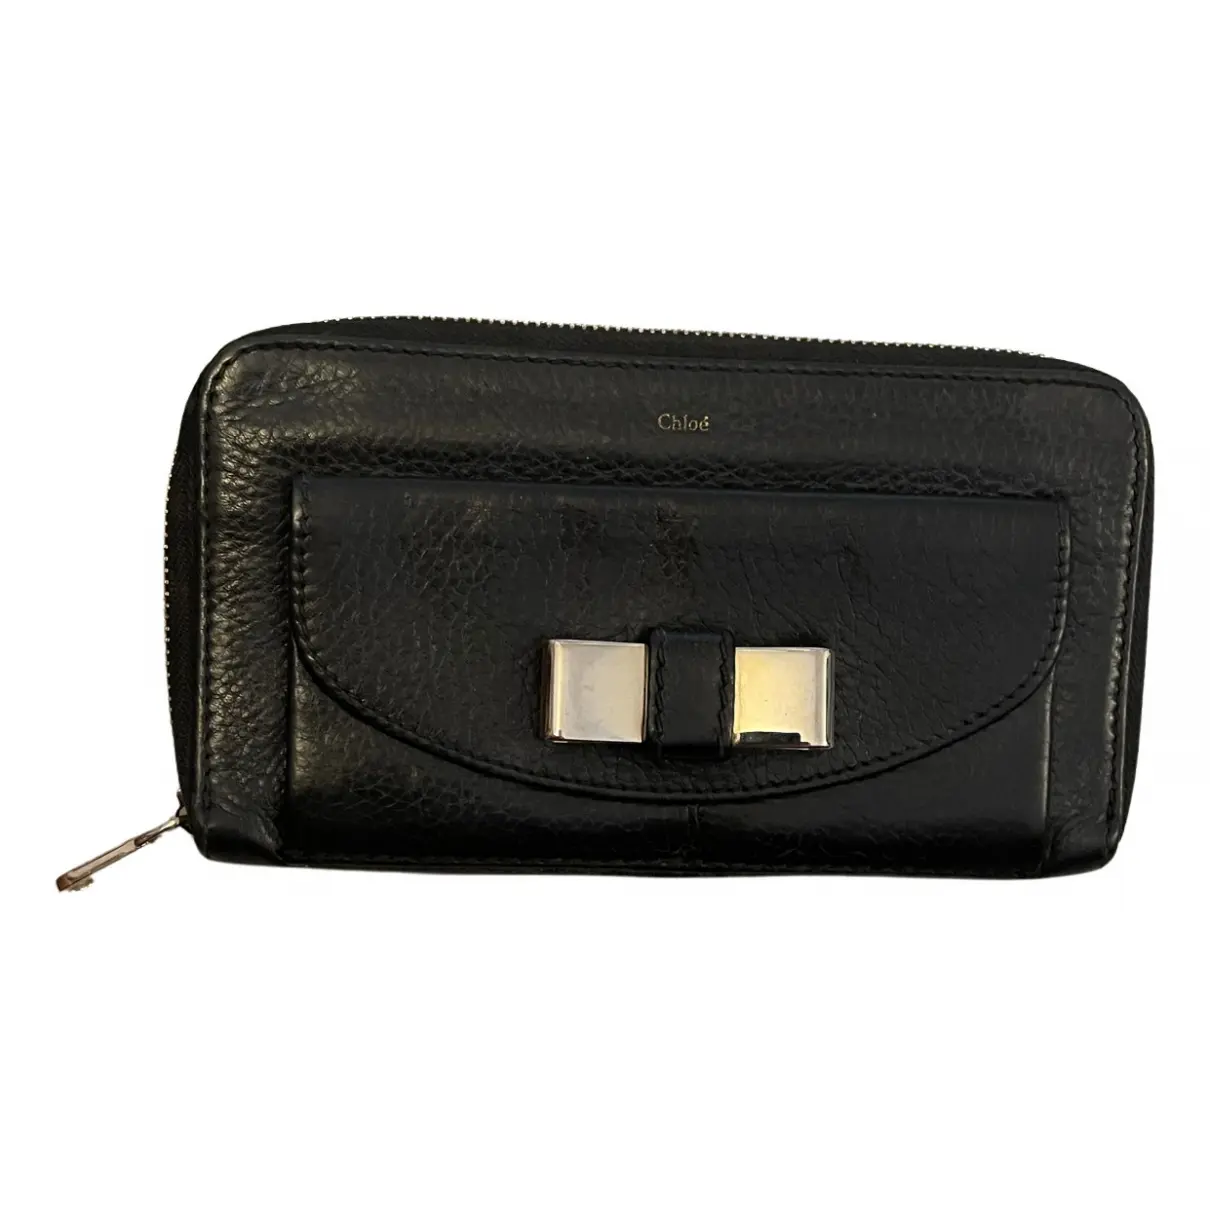 Paraty leather wallet Chloé